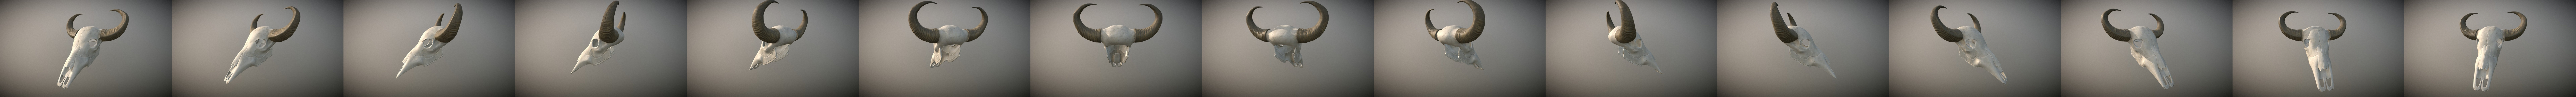 Buffalo Skull 3d Model By Stas Stas Sayhallo 670eb55